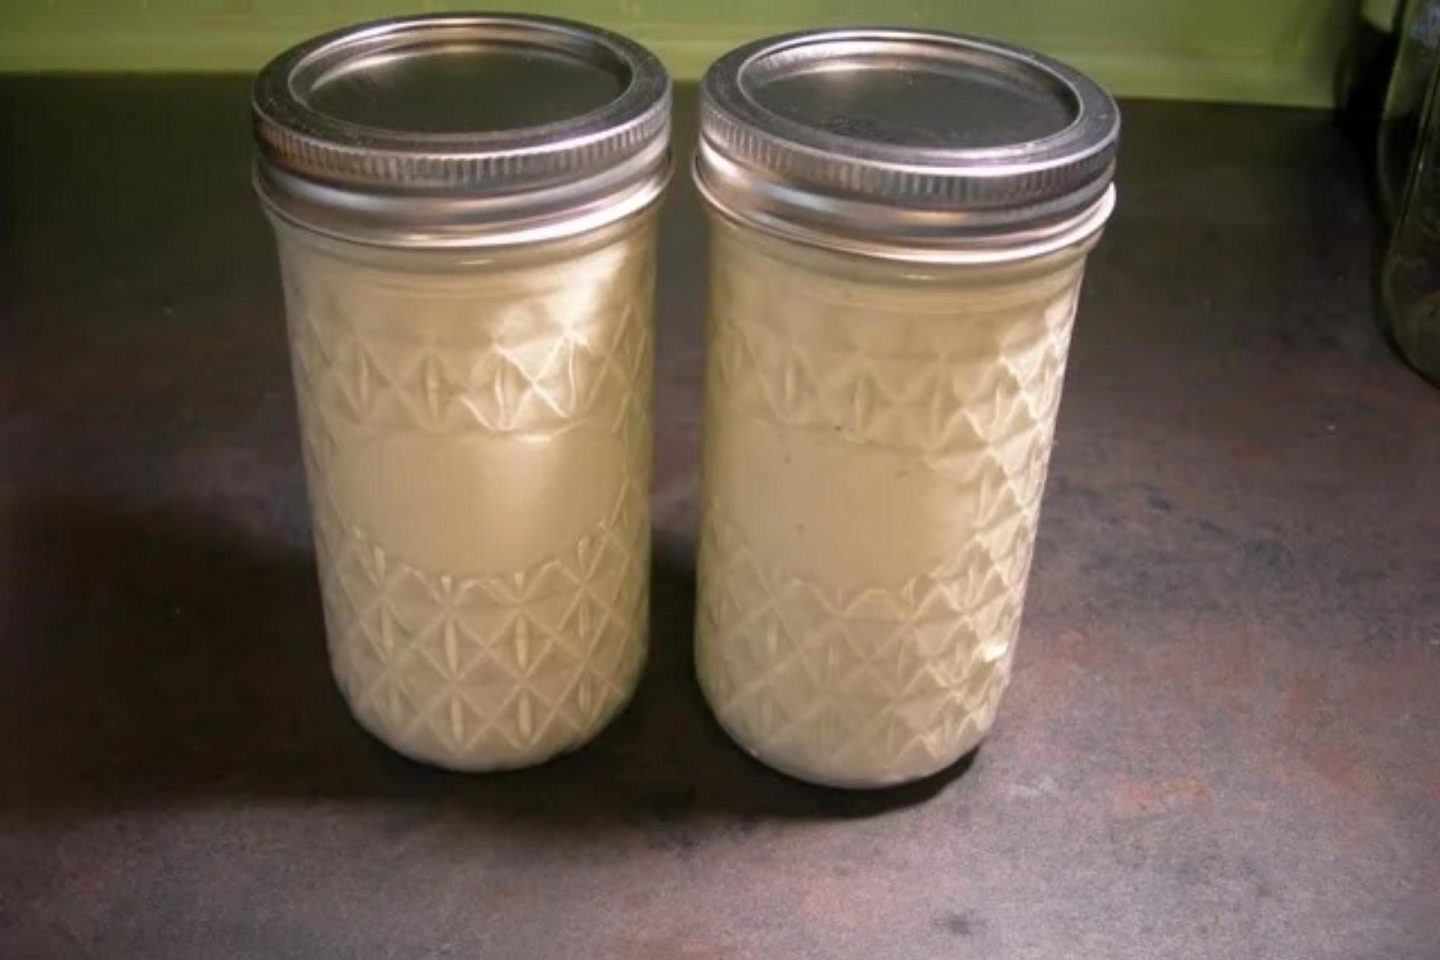 Sealed jars with cucumber salad dressing